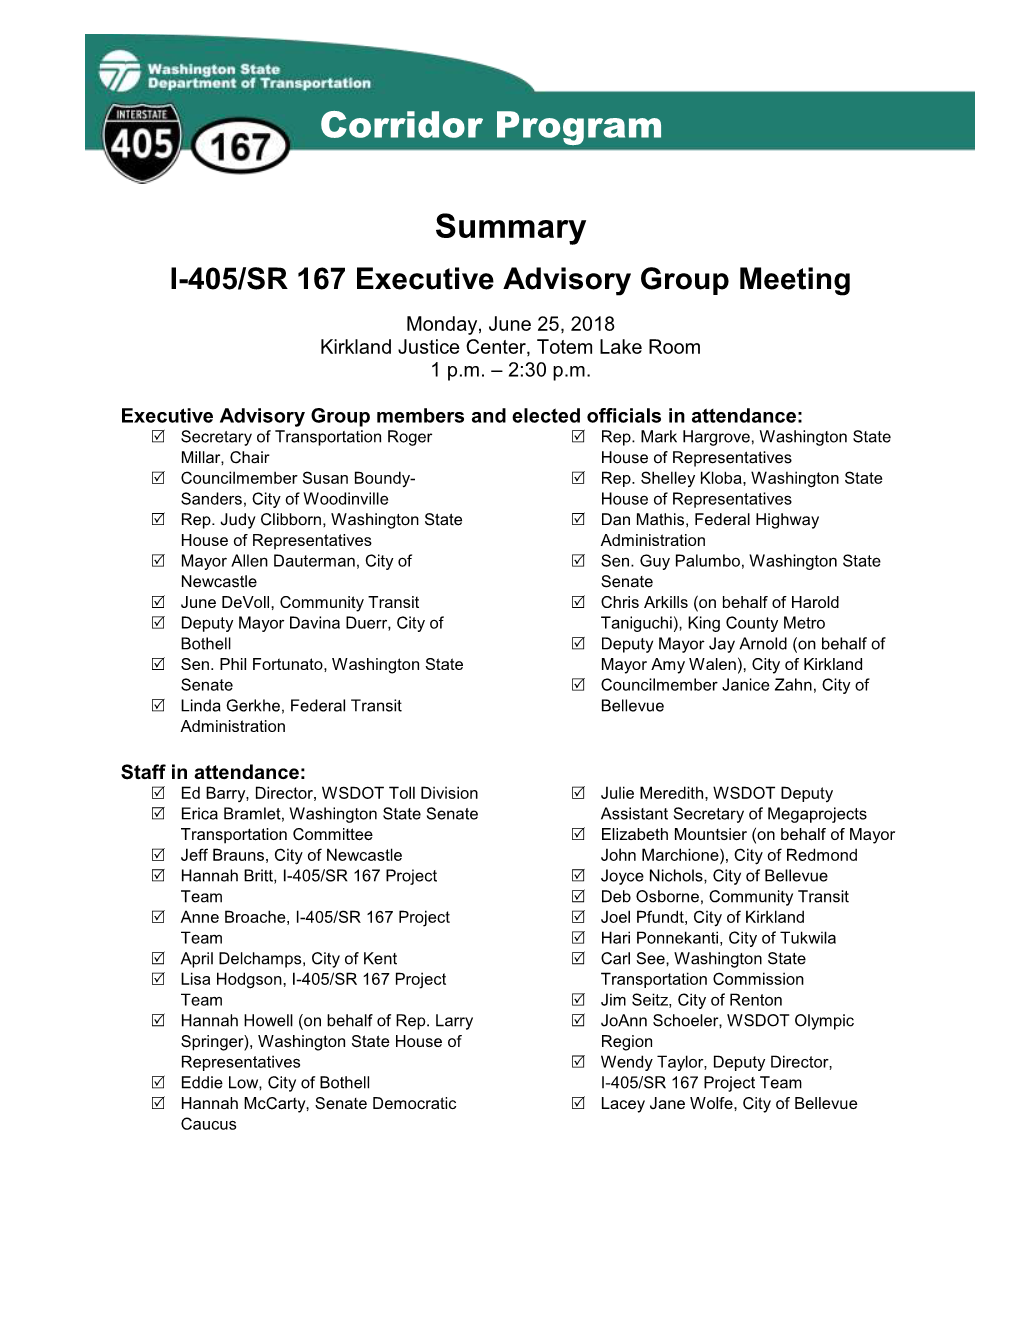 I-405/SR 167 Executive Advisory Group Meeting Summary